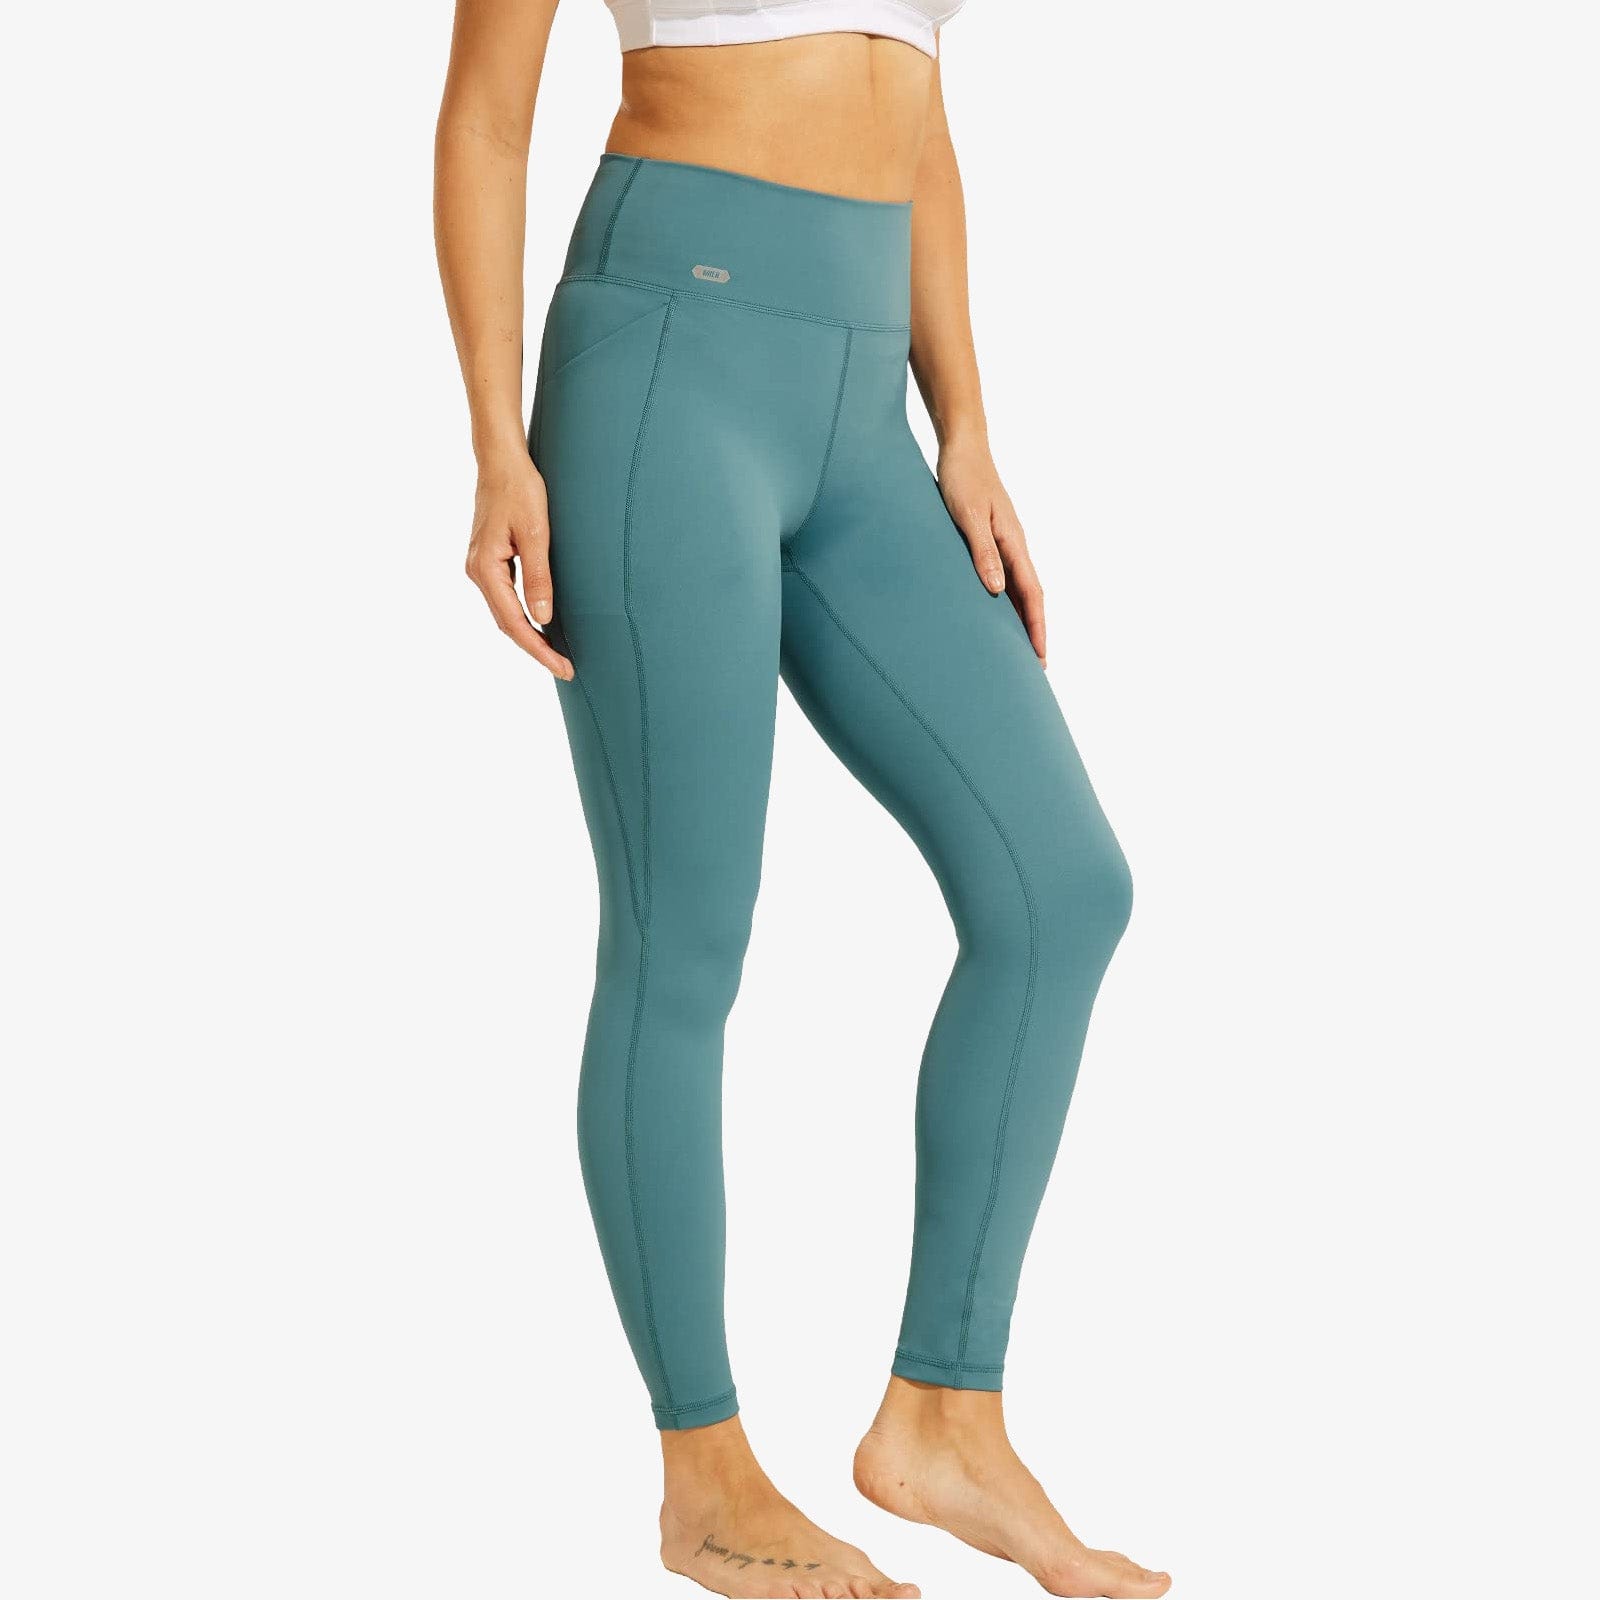 Women High Waist Workout Yoga Pants Athletic Legging with Pockets Women Yoga Pants Teal / S MIER